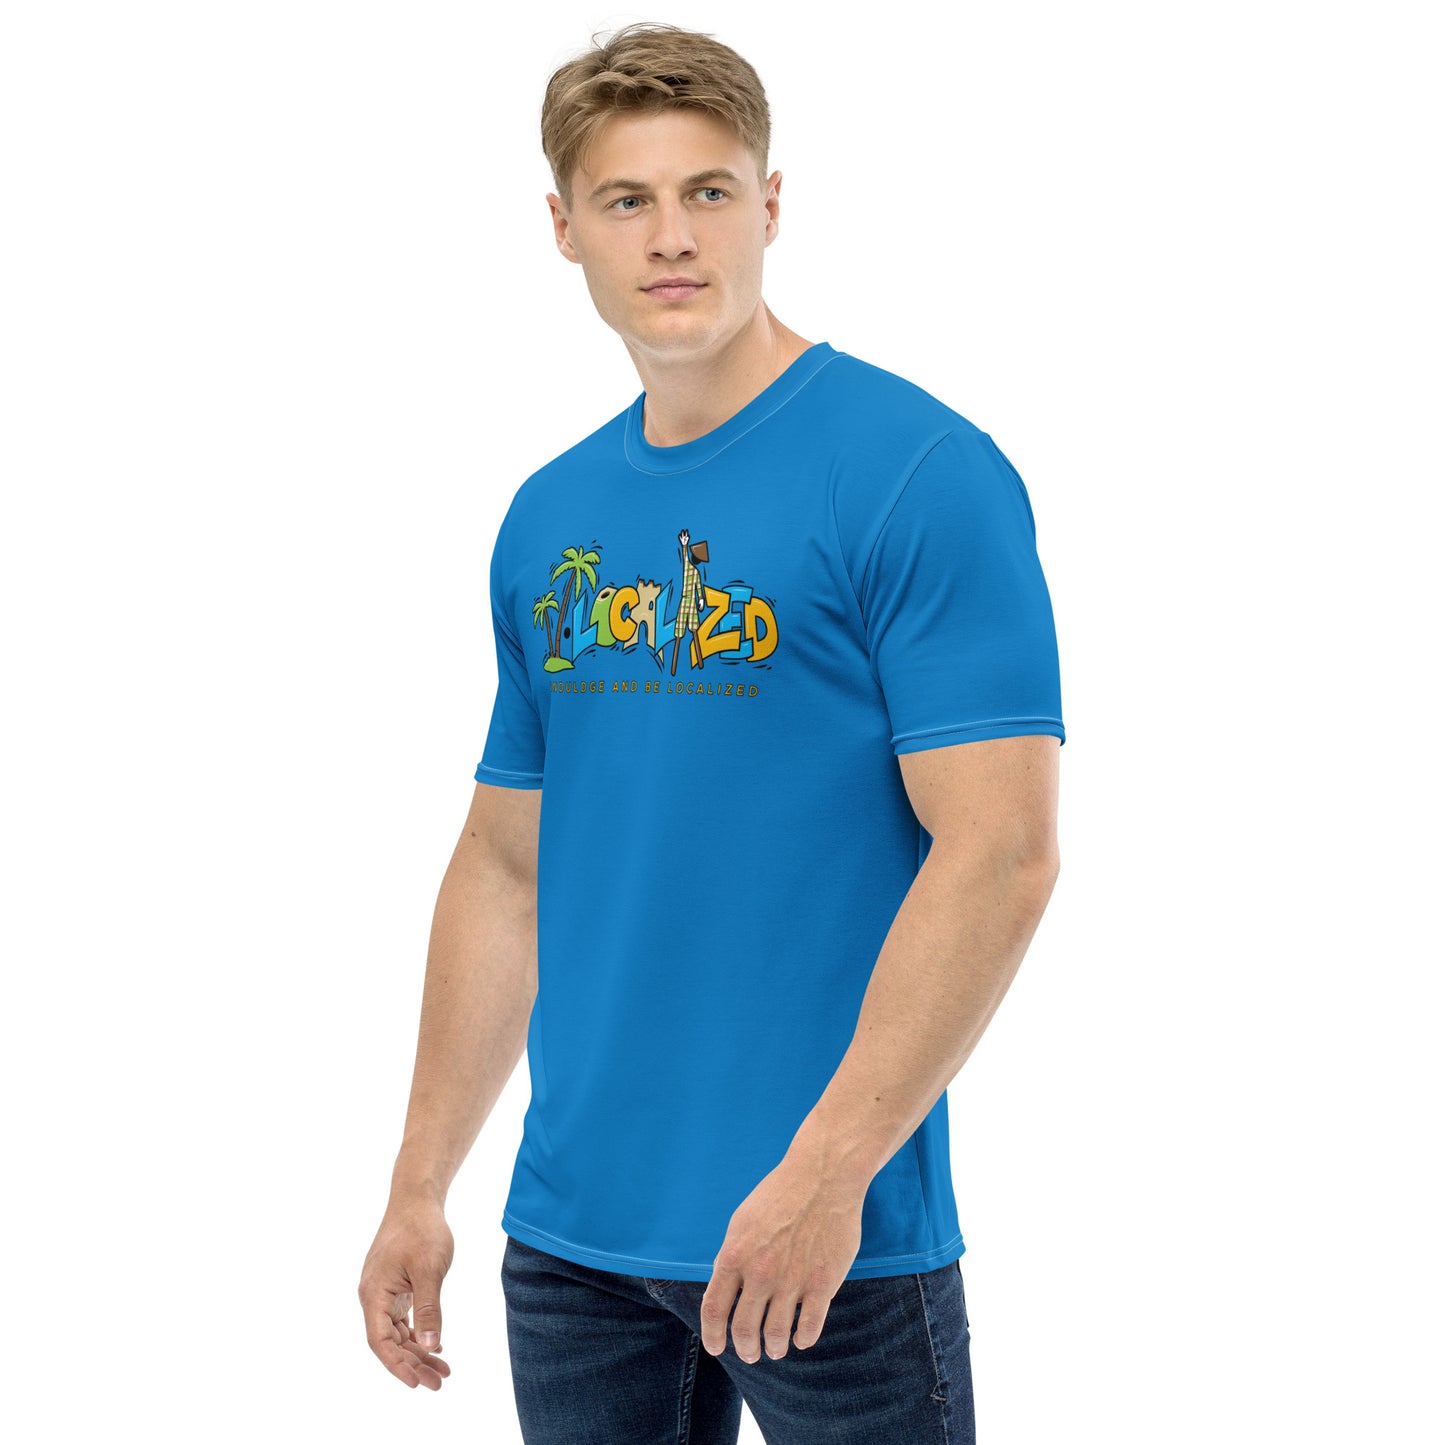 Blue V.Localized (Regular) Men’s Dry-Fit T-Shirt